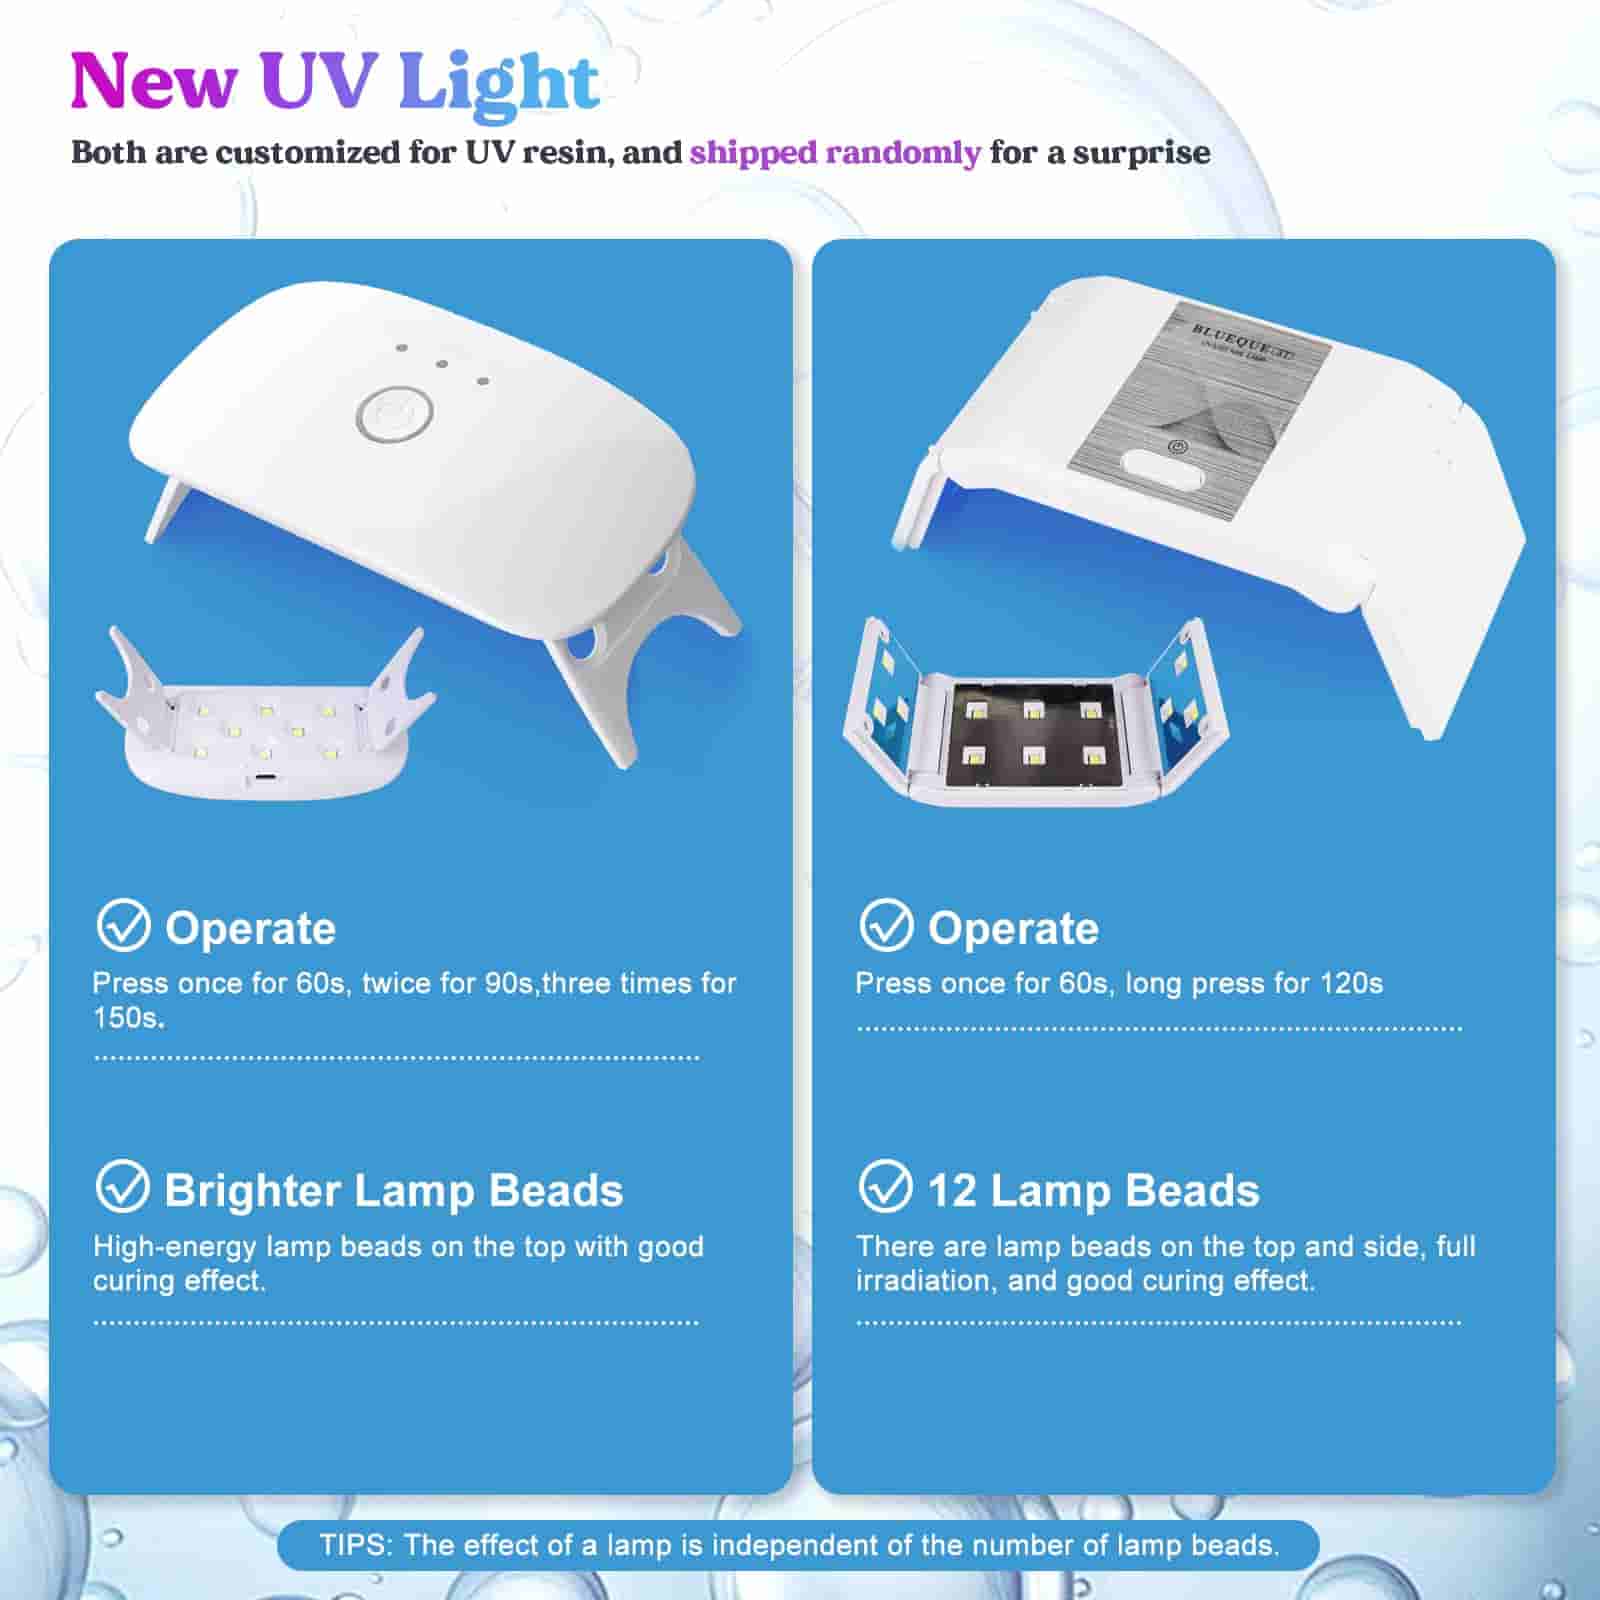 LET'S RESIN UV Resin Kit with Light, Bonding&Curing in Seconds